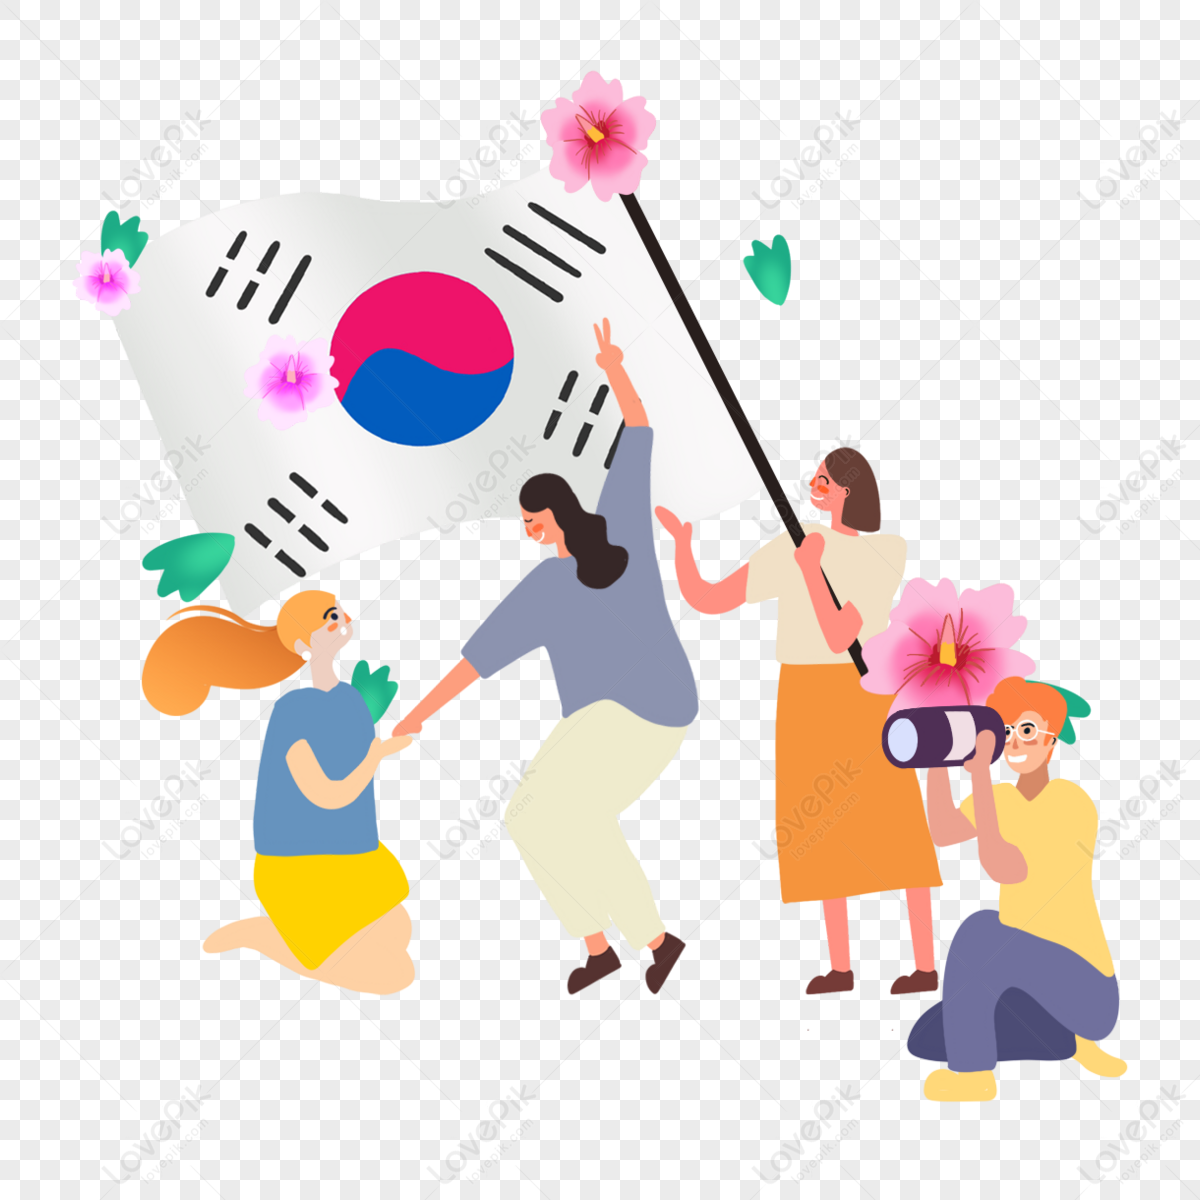 South Korea hibiscus flower flag revolt illustration,festival,paint hand png image free download